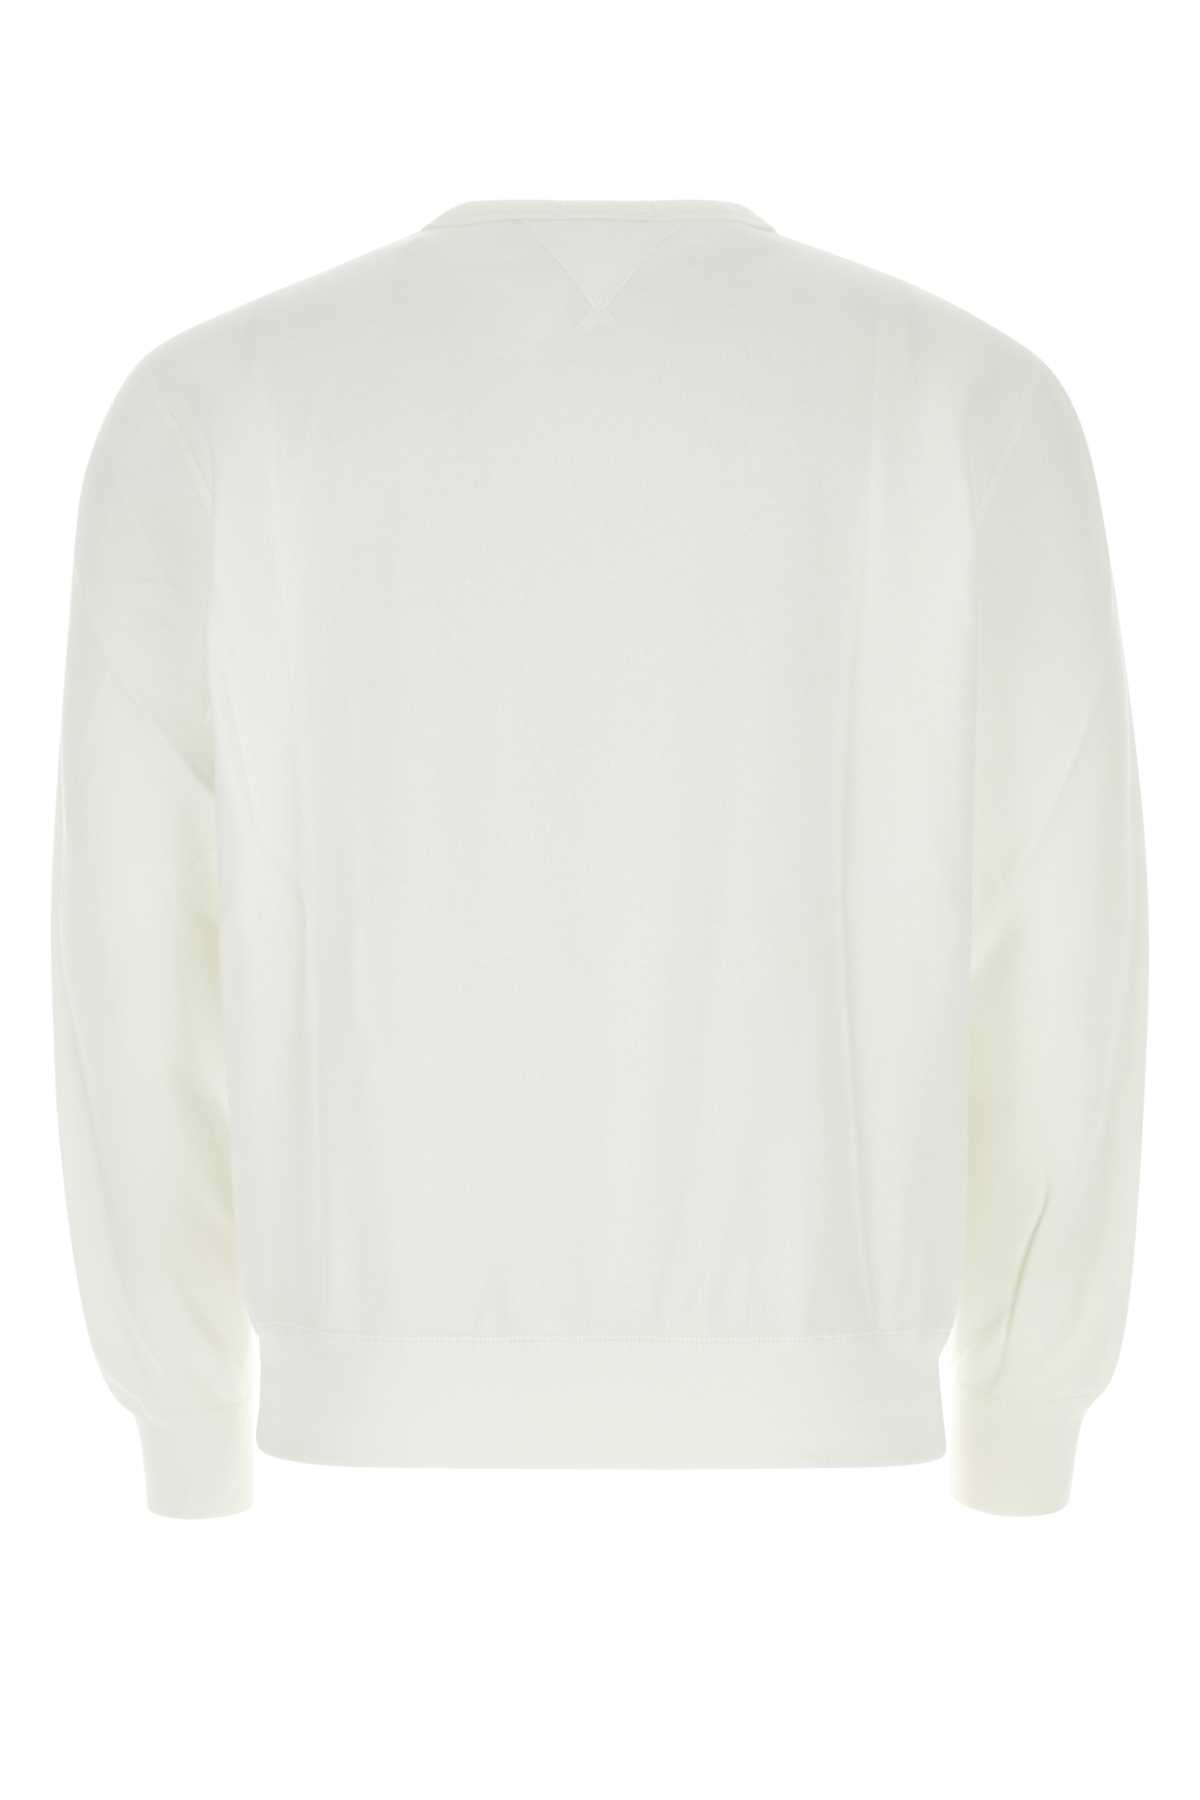 Shop Polo Ralph Lauren White Cotton Blend Oversize Sweatshirt